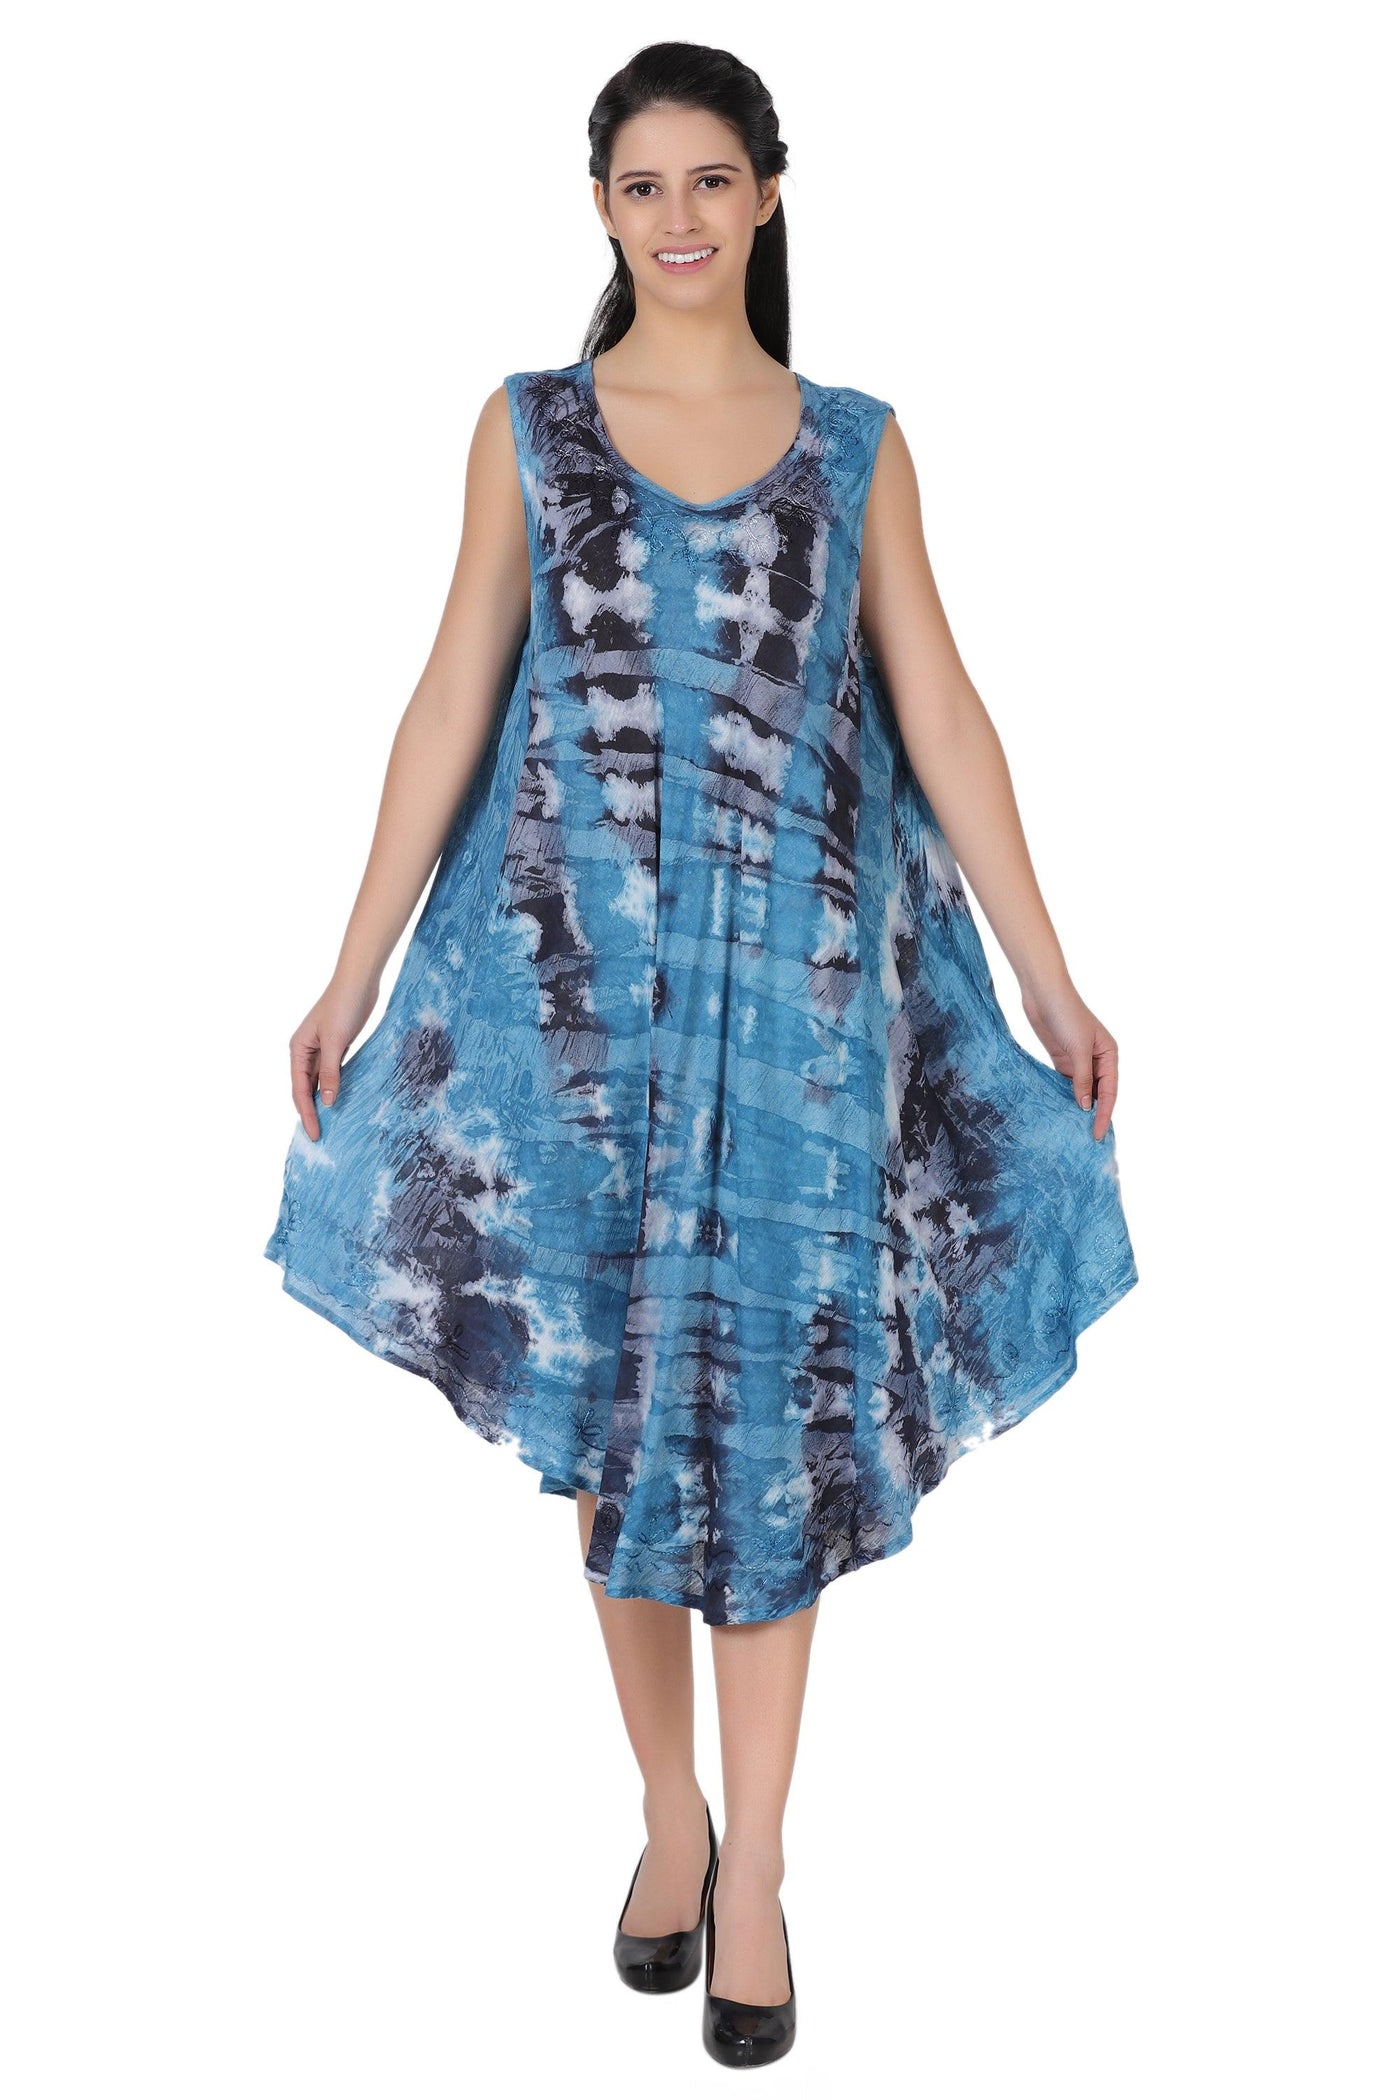 Stonewash Tie Dye Beach Dress 362168R  - Advance Apparels Inc